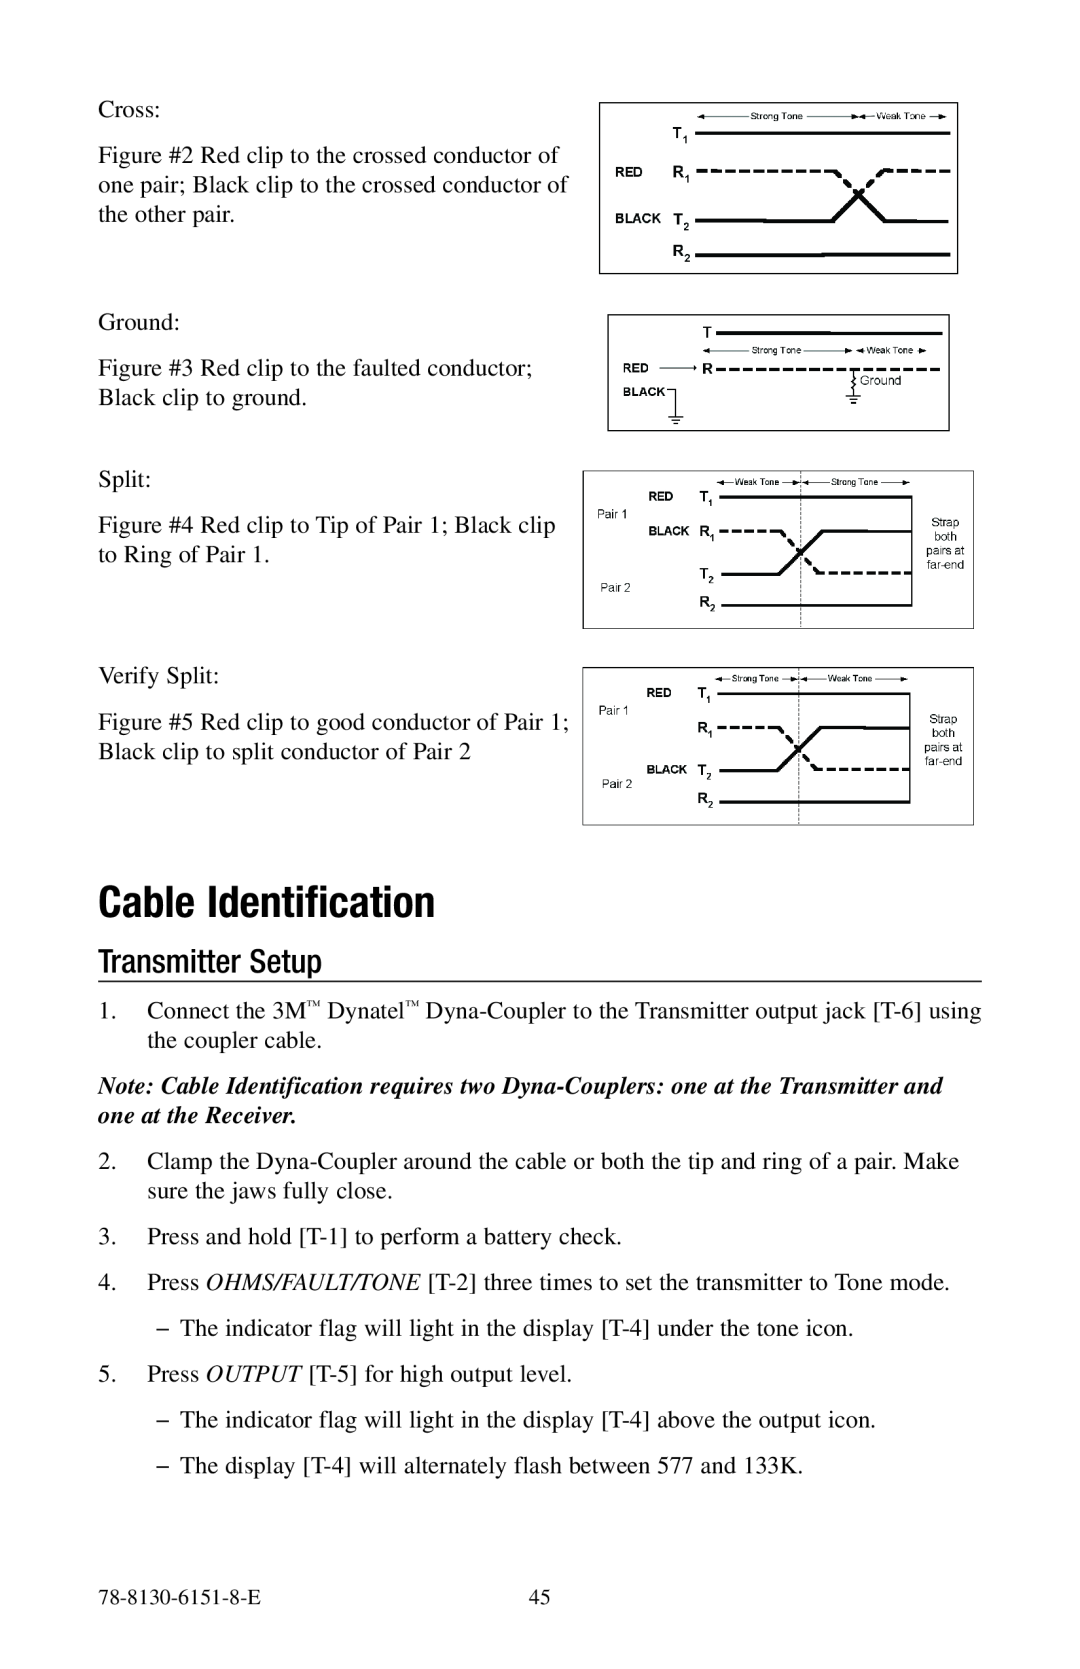 3M 2250ME-iD, 2273ME-iD manual Cable Identification, Transmitter Setup 